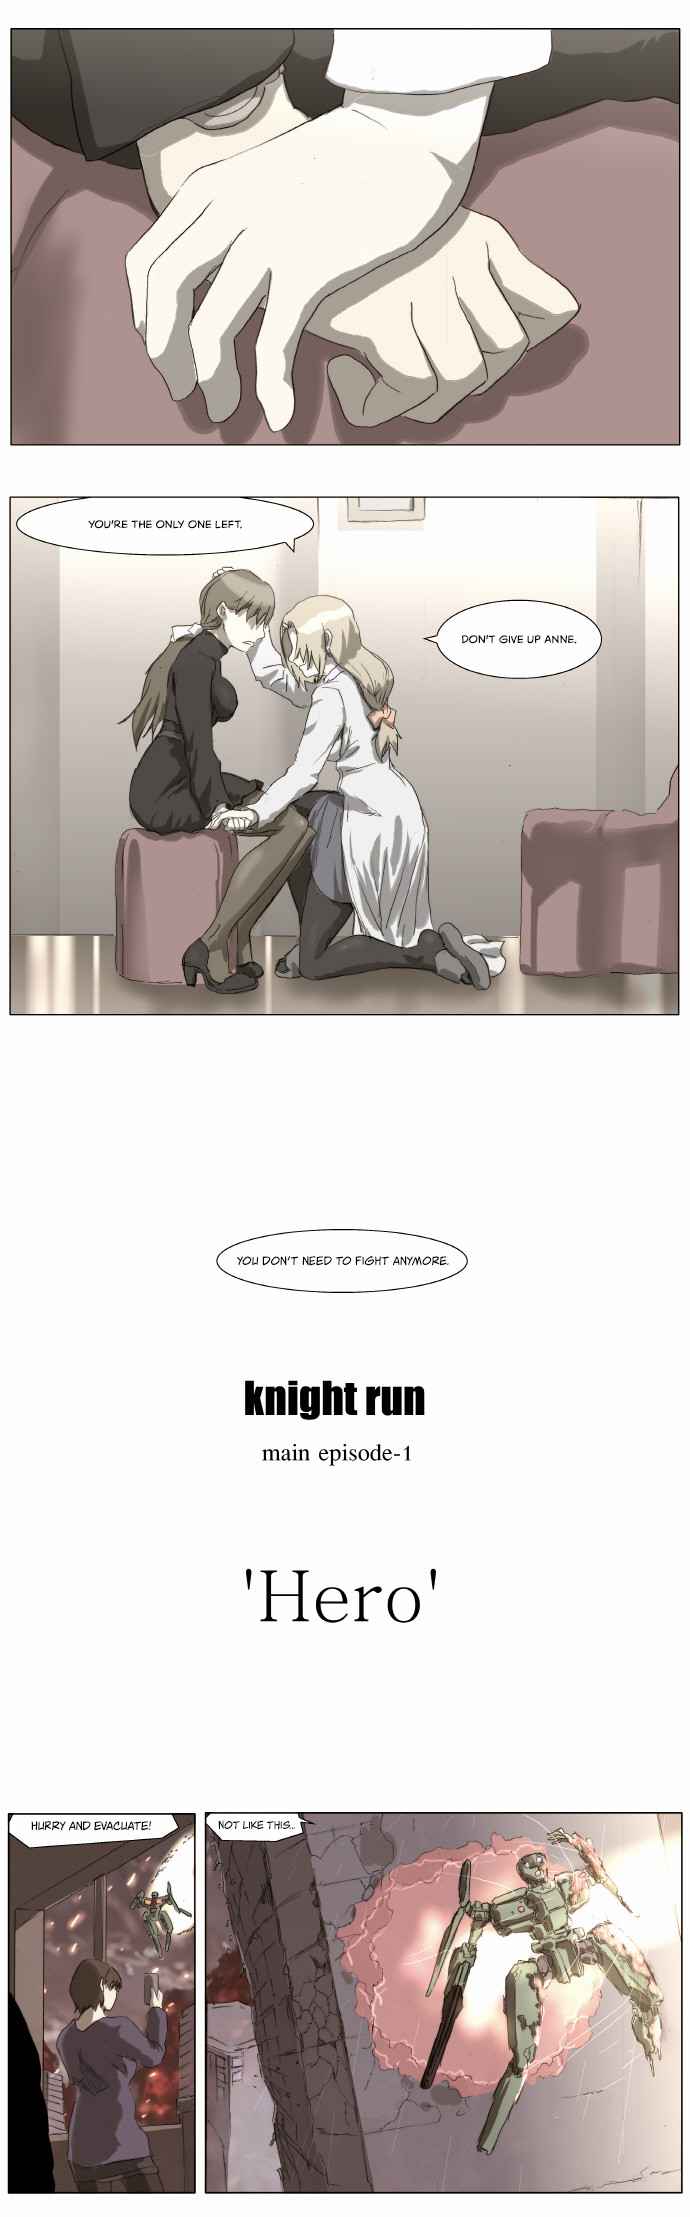 Knight Run Vol. 3 Ch. 171 Hero Part 2 | Seed